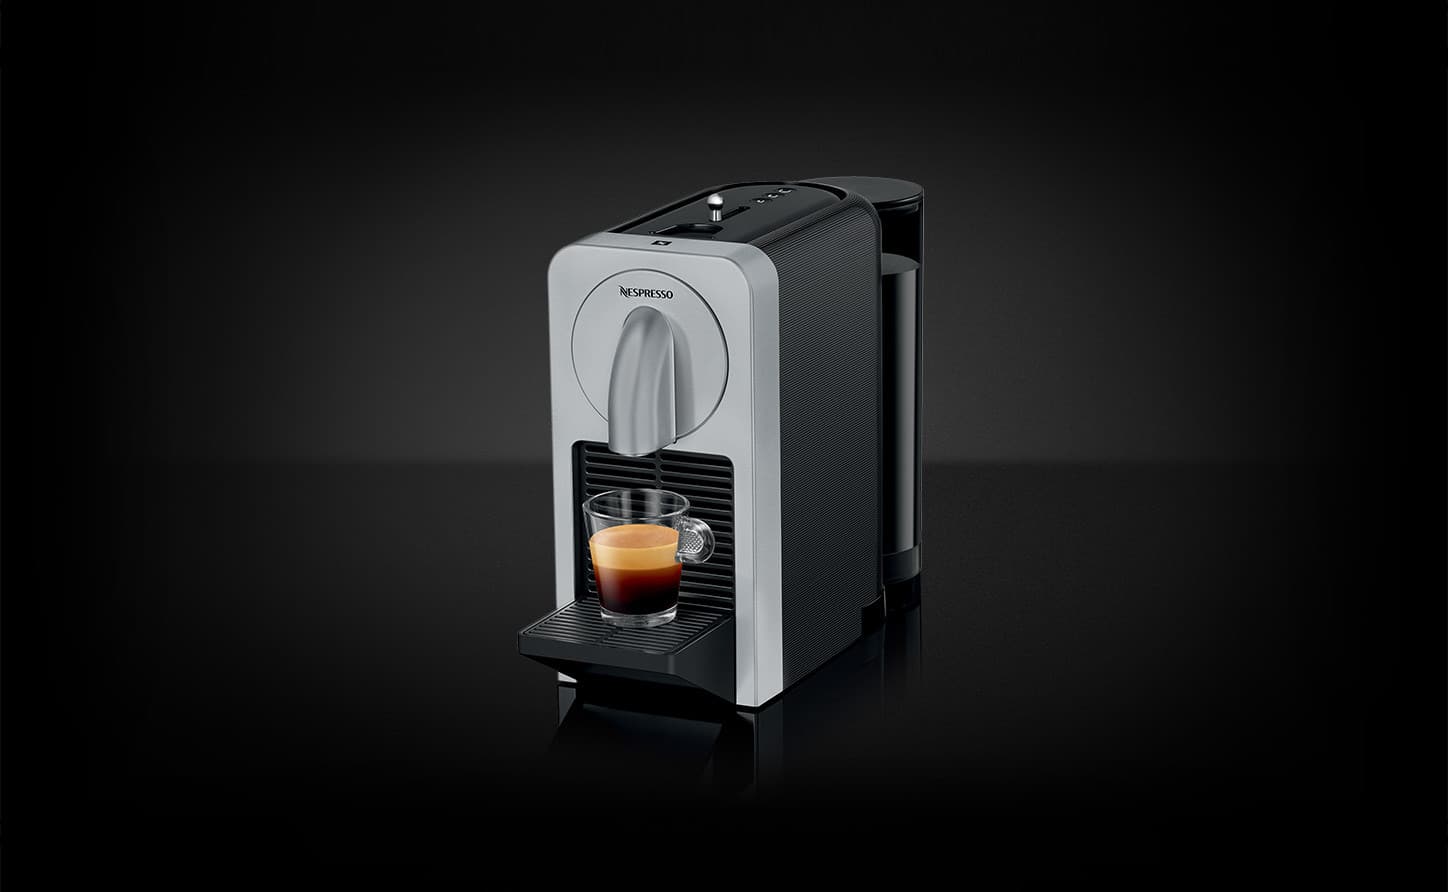 Nespresso's new Prodigio espresso enabled | Stark Insider